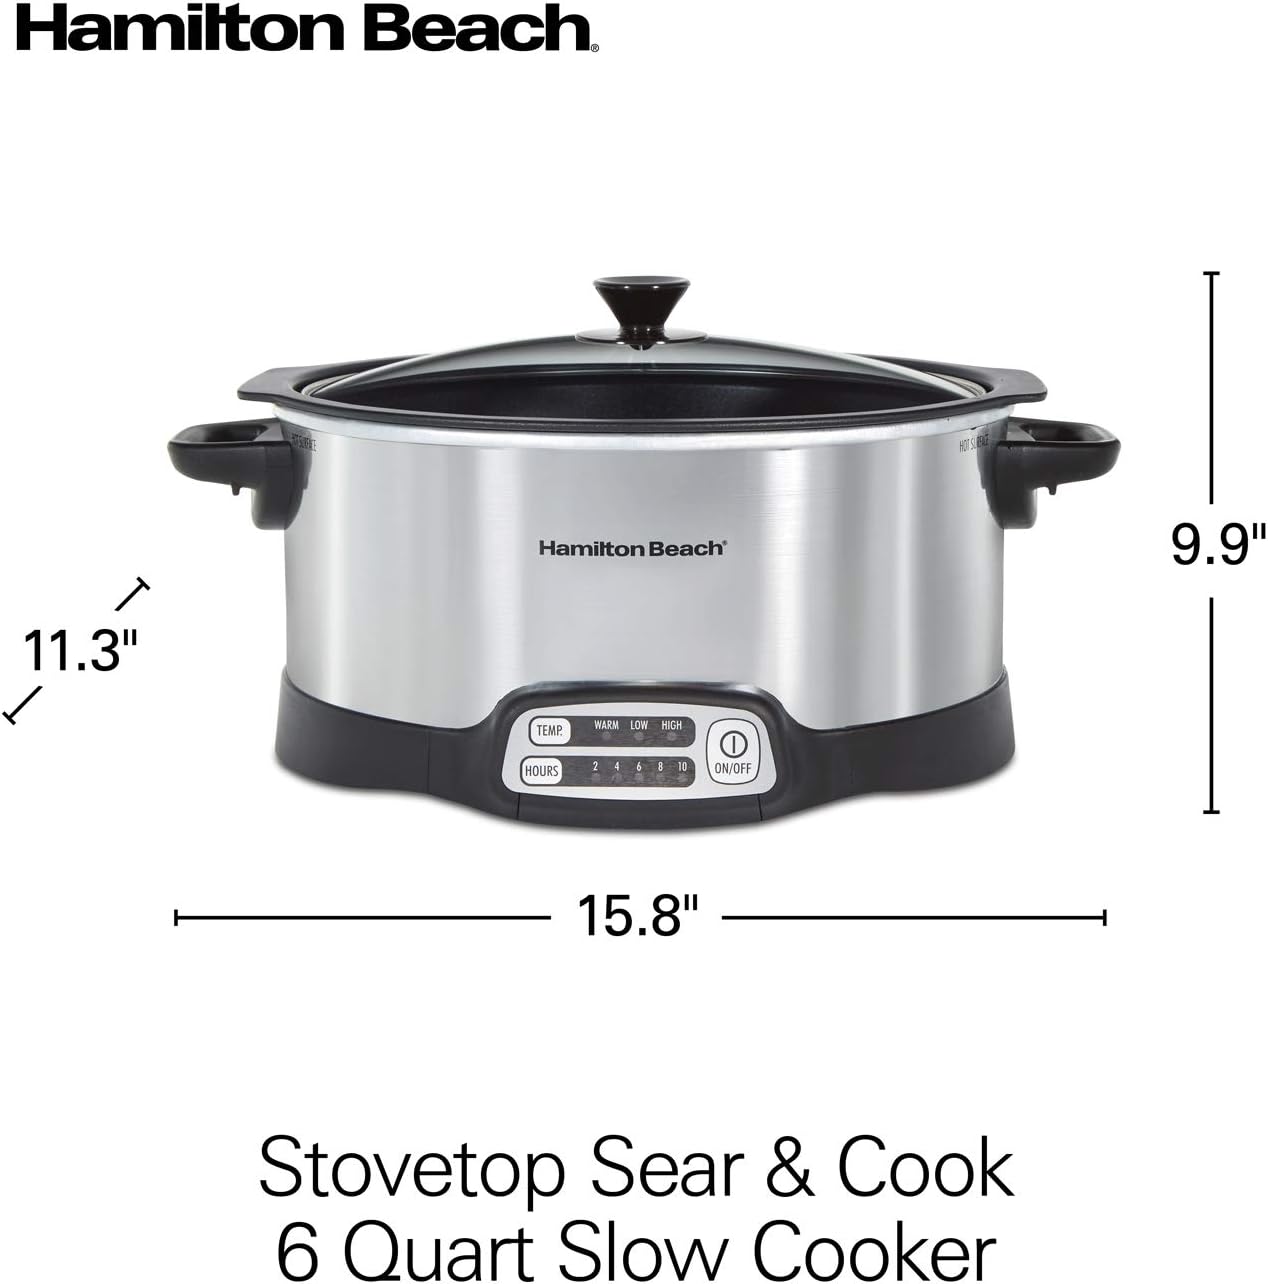 Hamilton Beach Programmable Rice Cooker and Steamer - Silver/Black